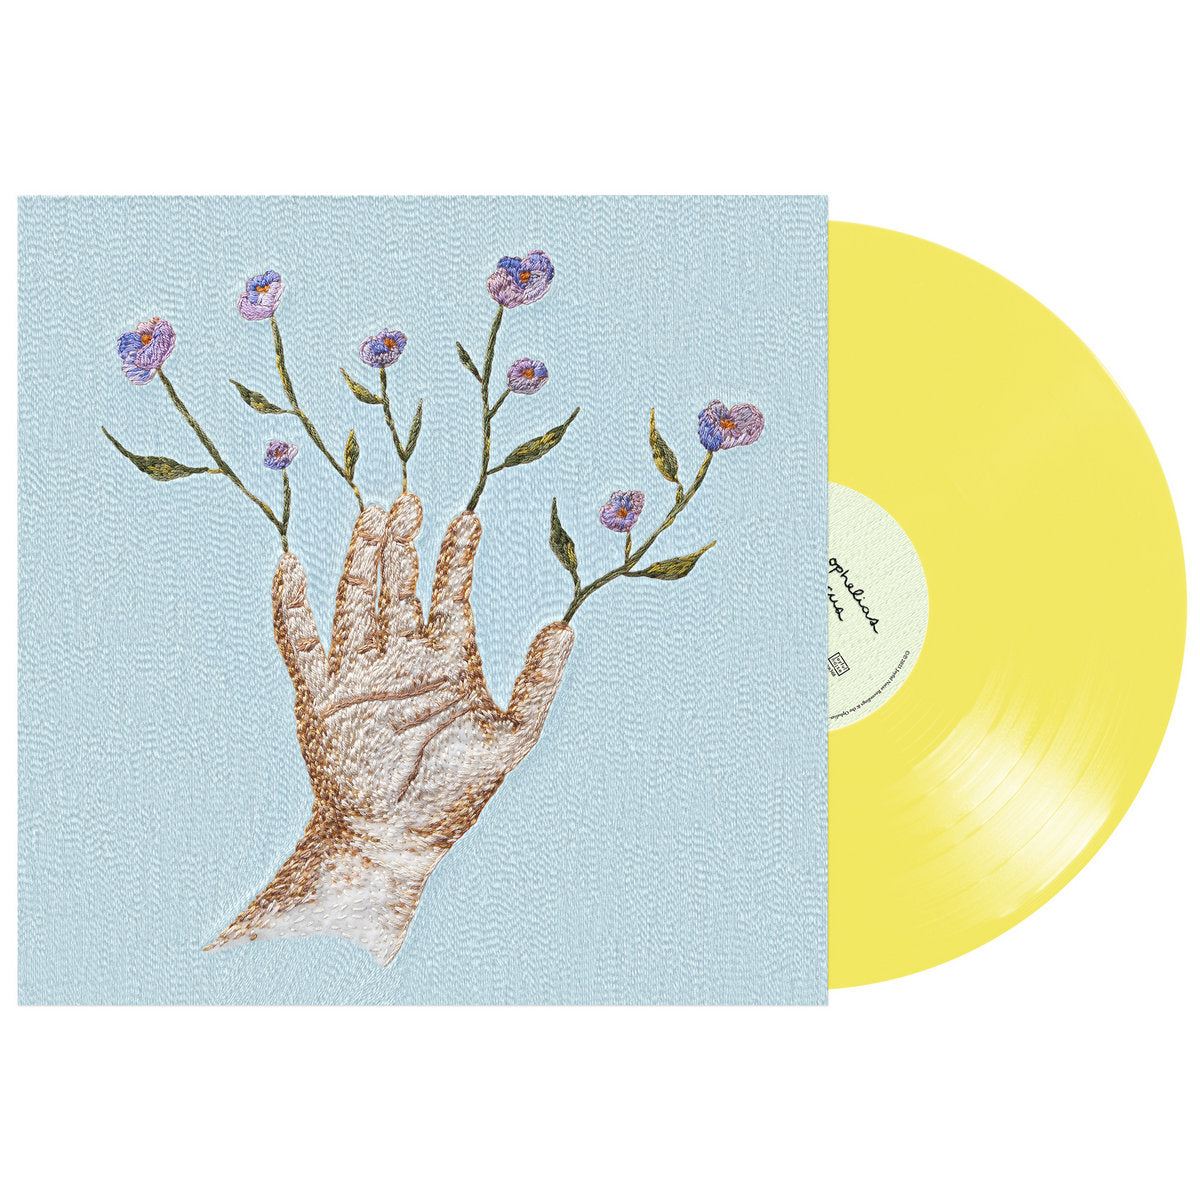 THE OPHELIAS - Crocus - LP - Pale Yellow Vinyl